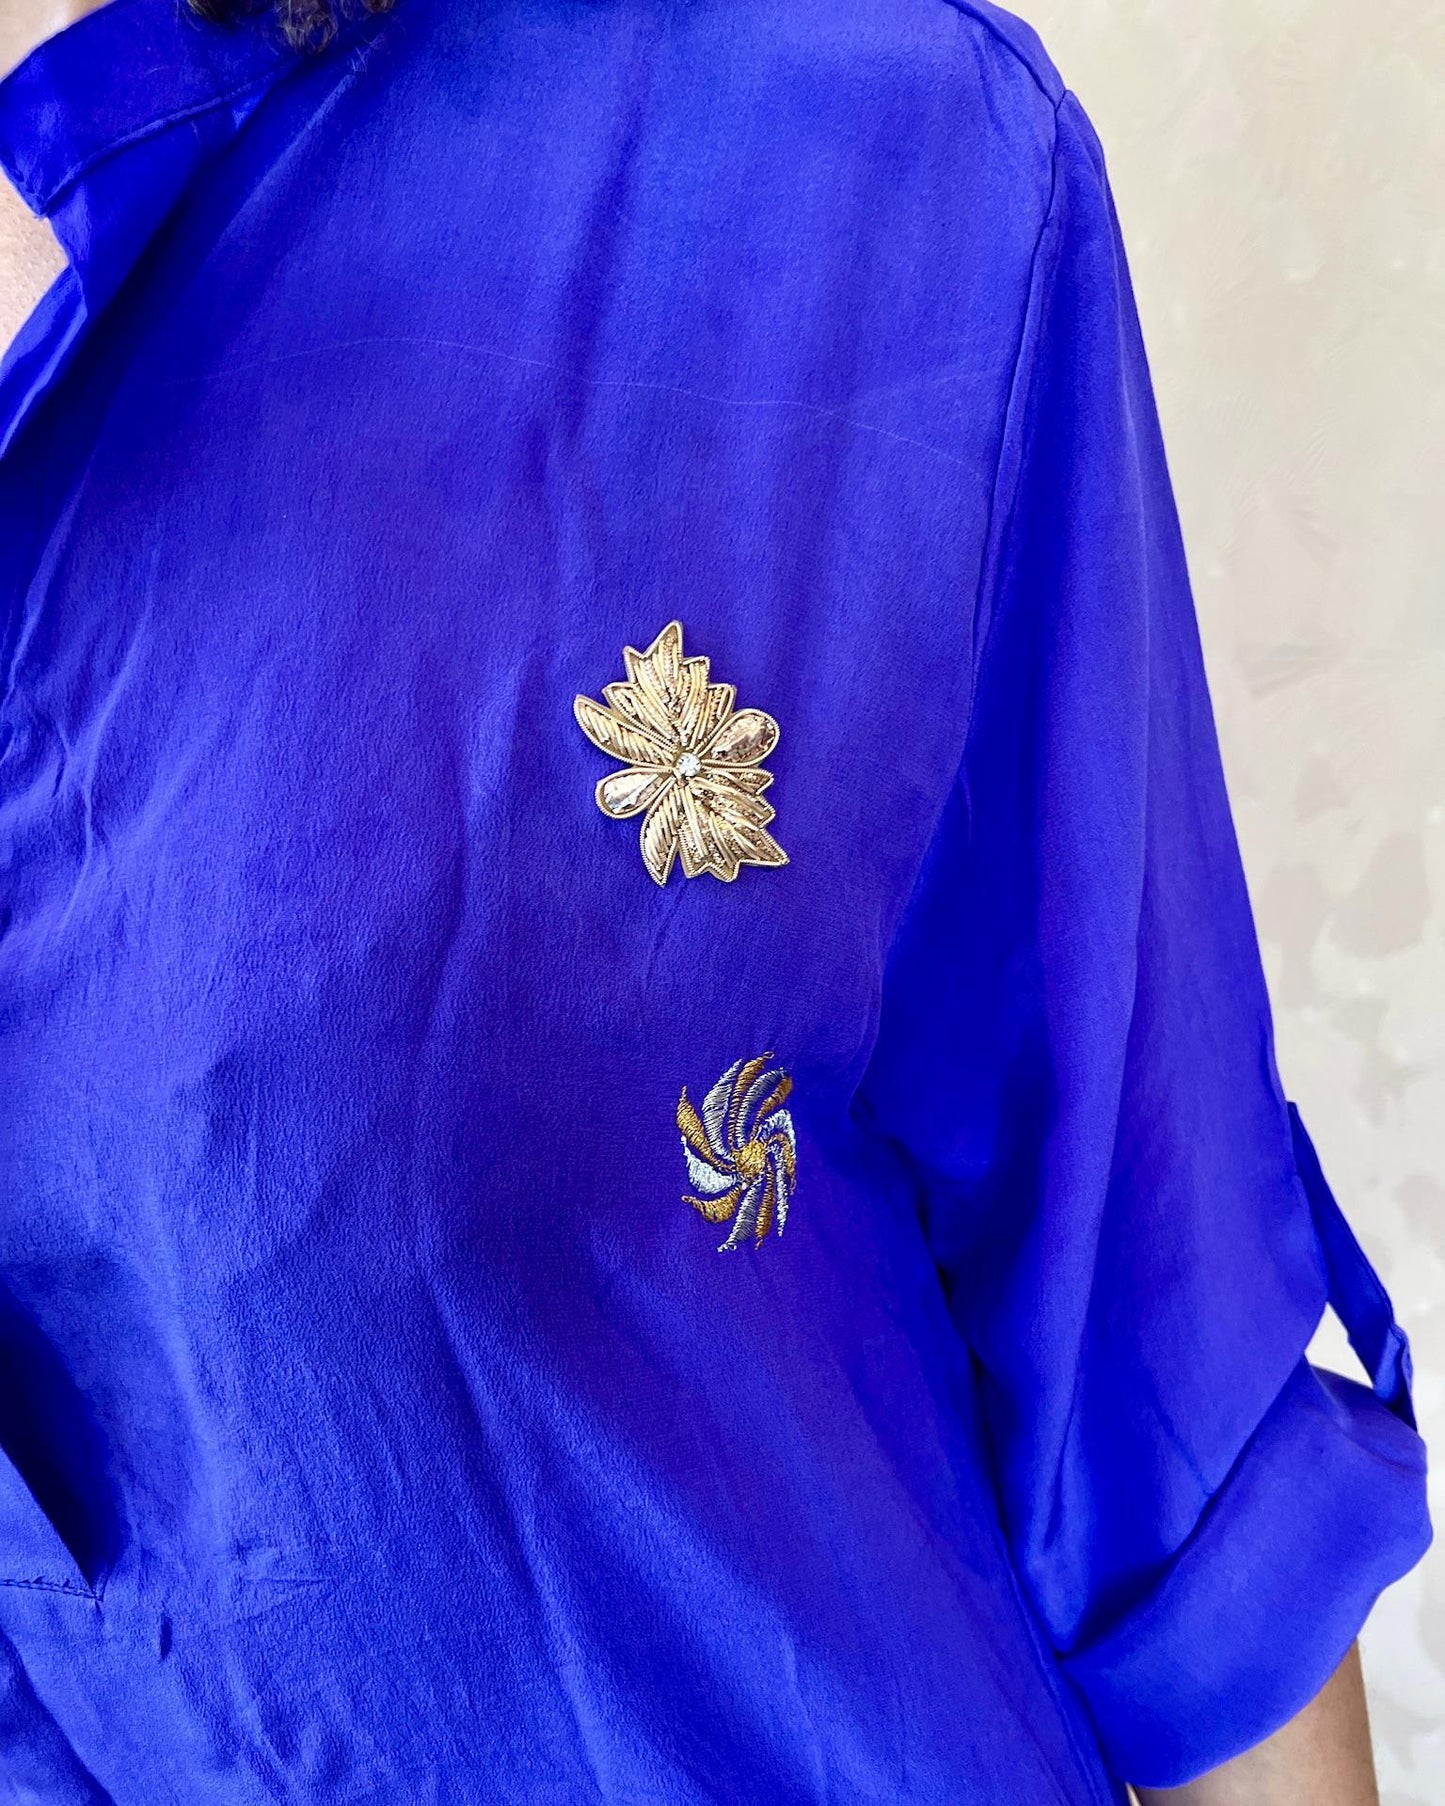 Indie Ella Talynn Silk Top in Royal Purple -size S/M